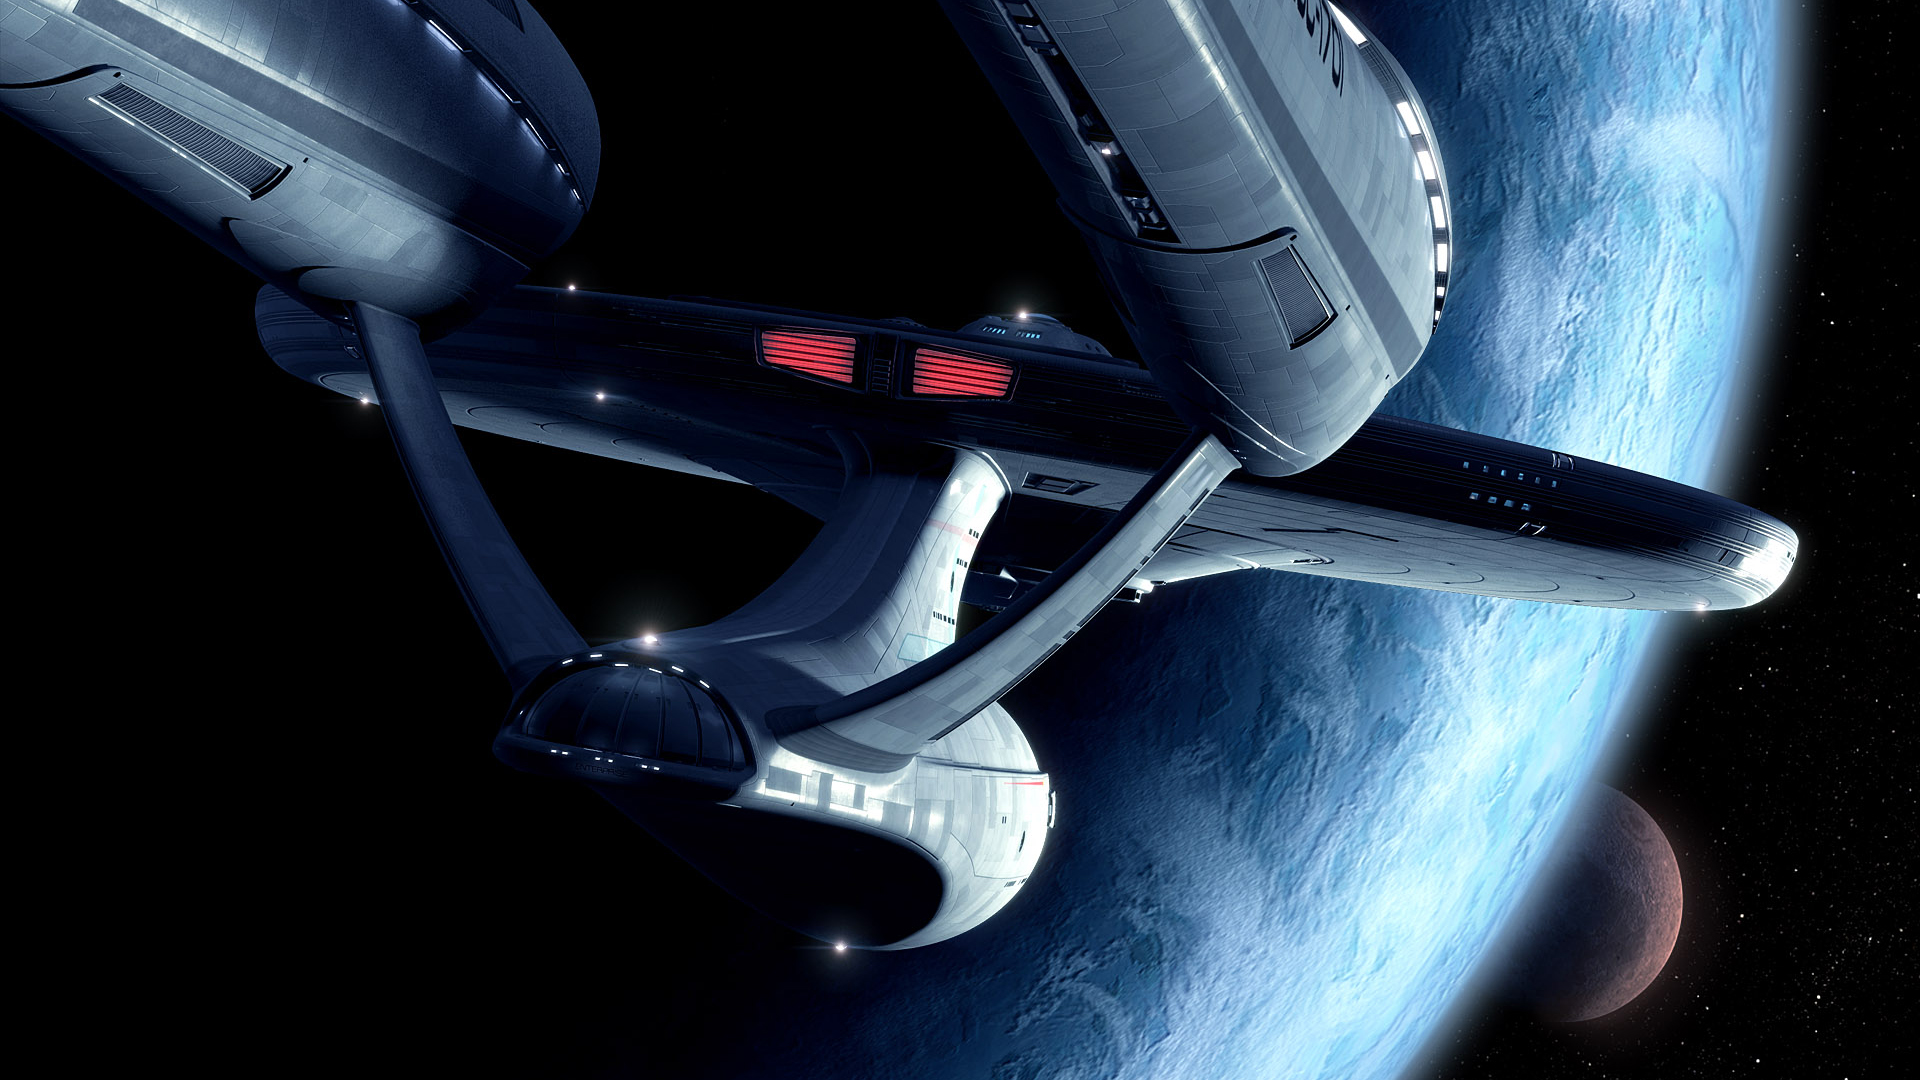 Sci Fi Star Trek HD Wallpaper and Background